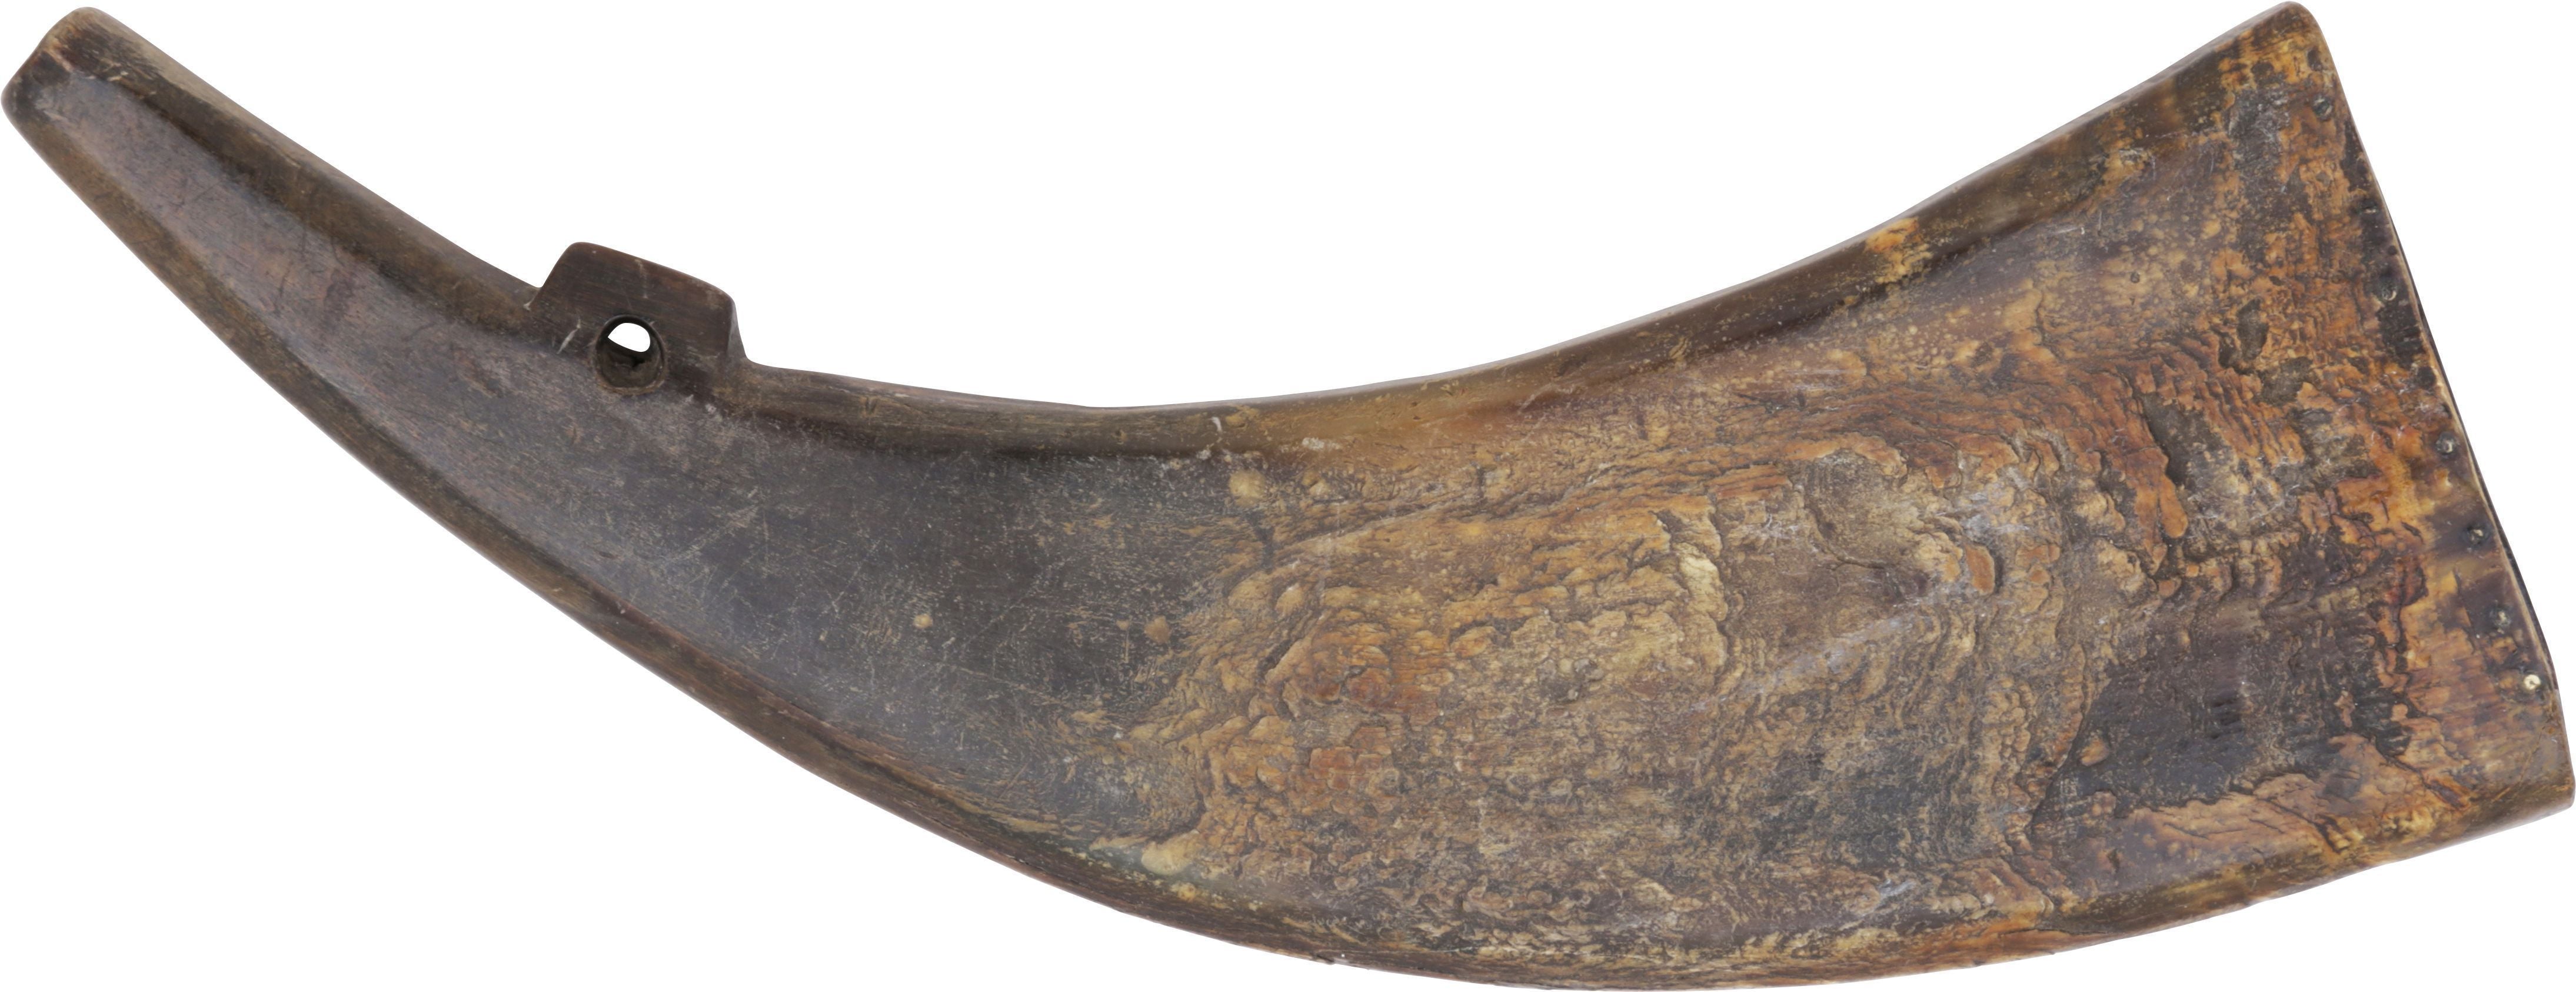 SCOTTISH FLATTENED HORN POWDER HORN C.1650-1700 - Fagan Arms